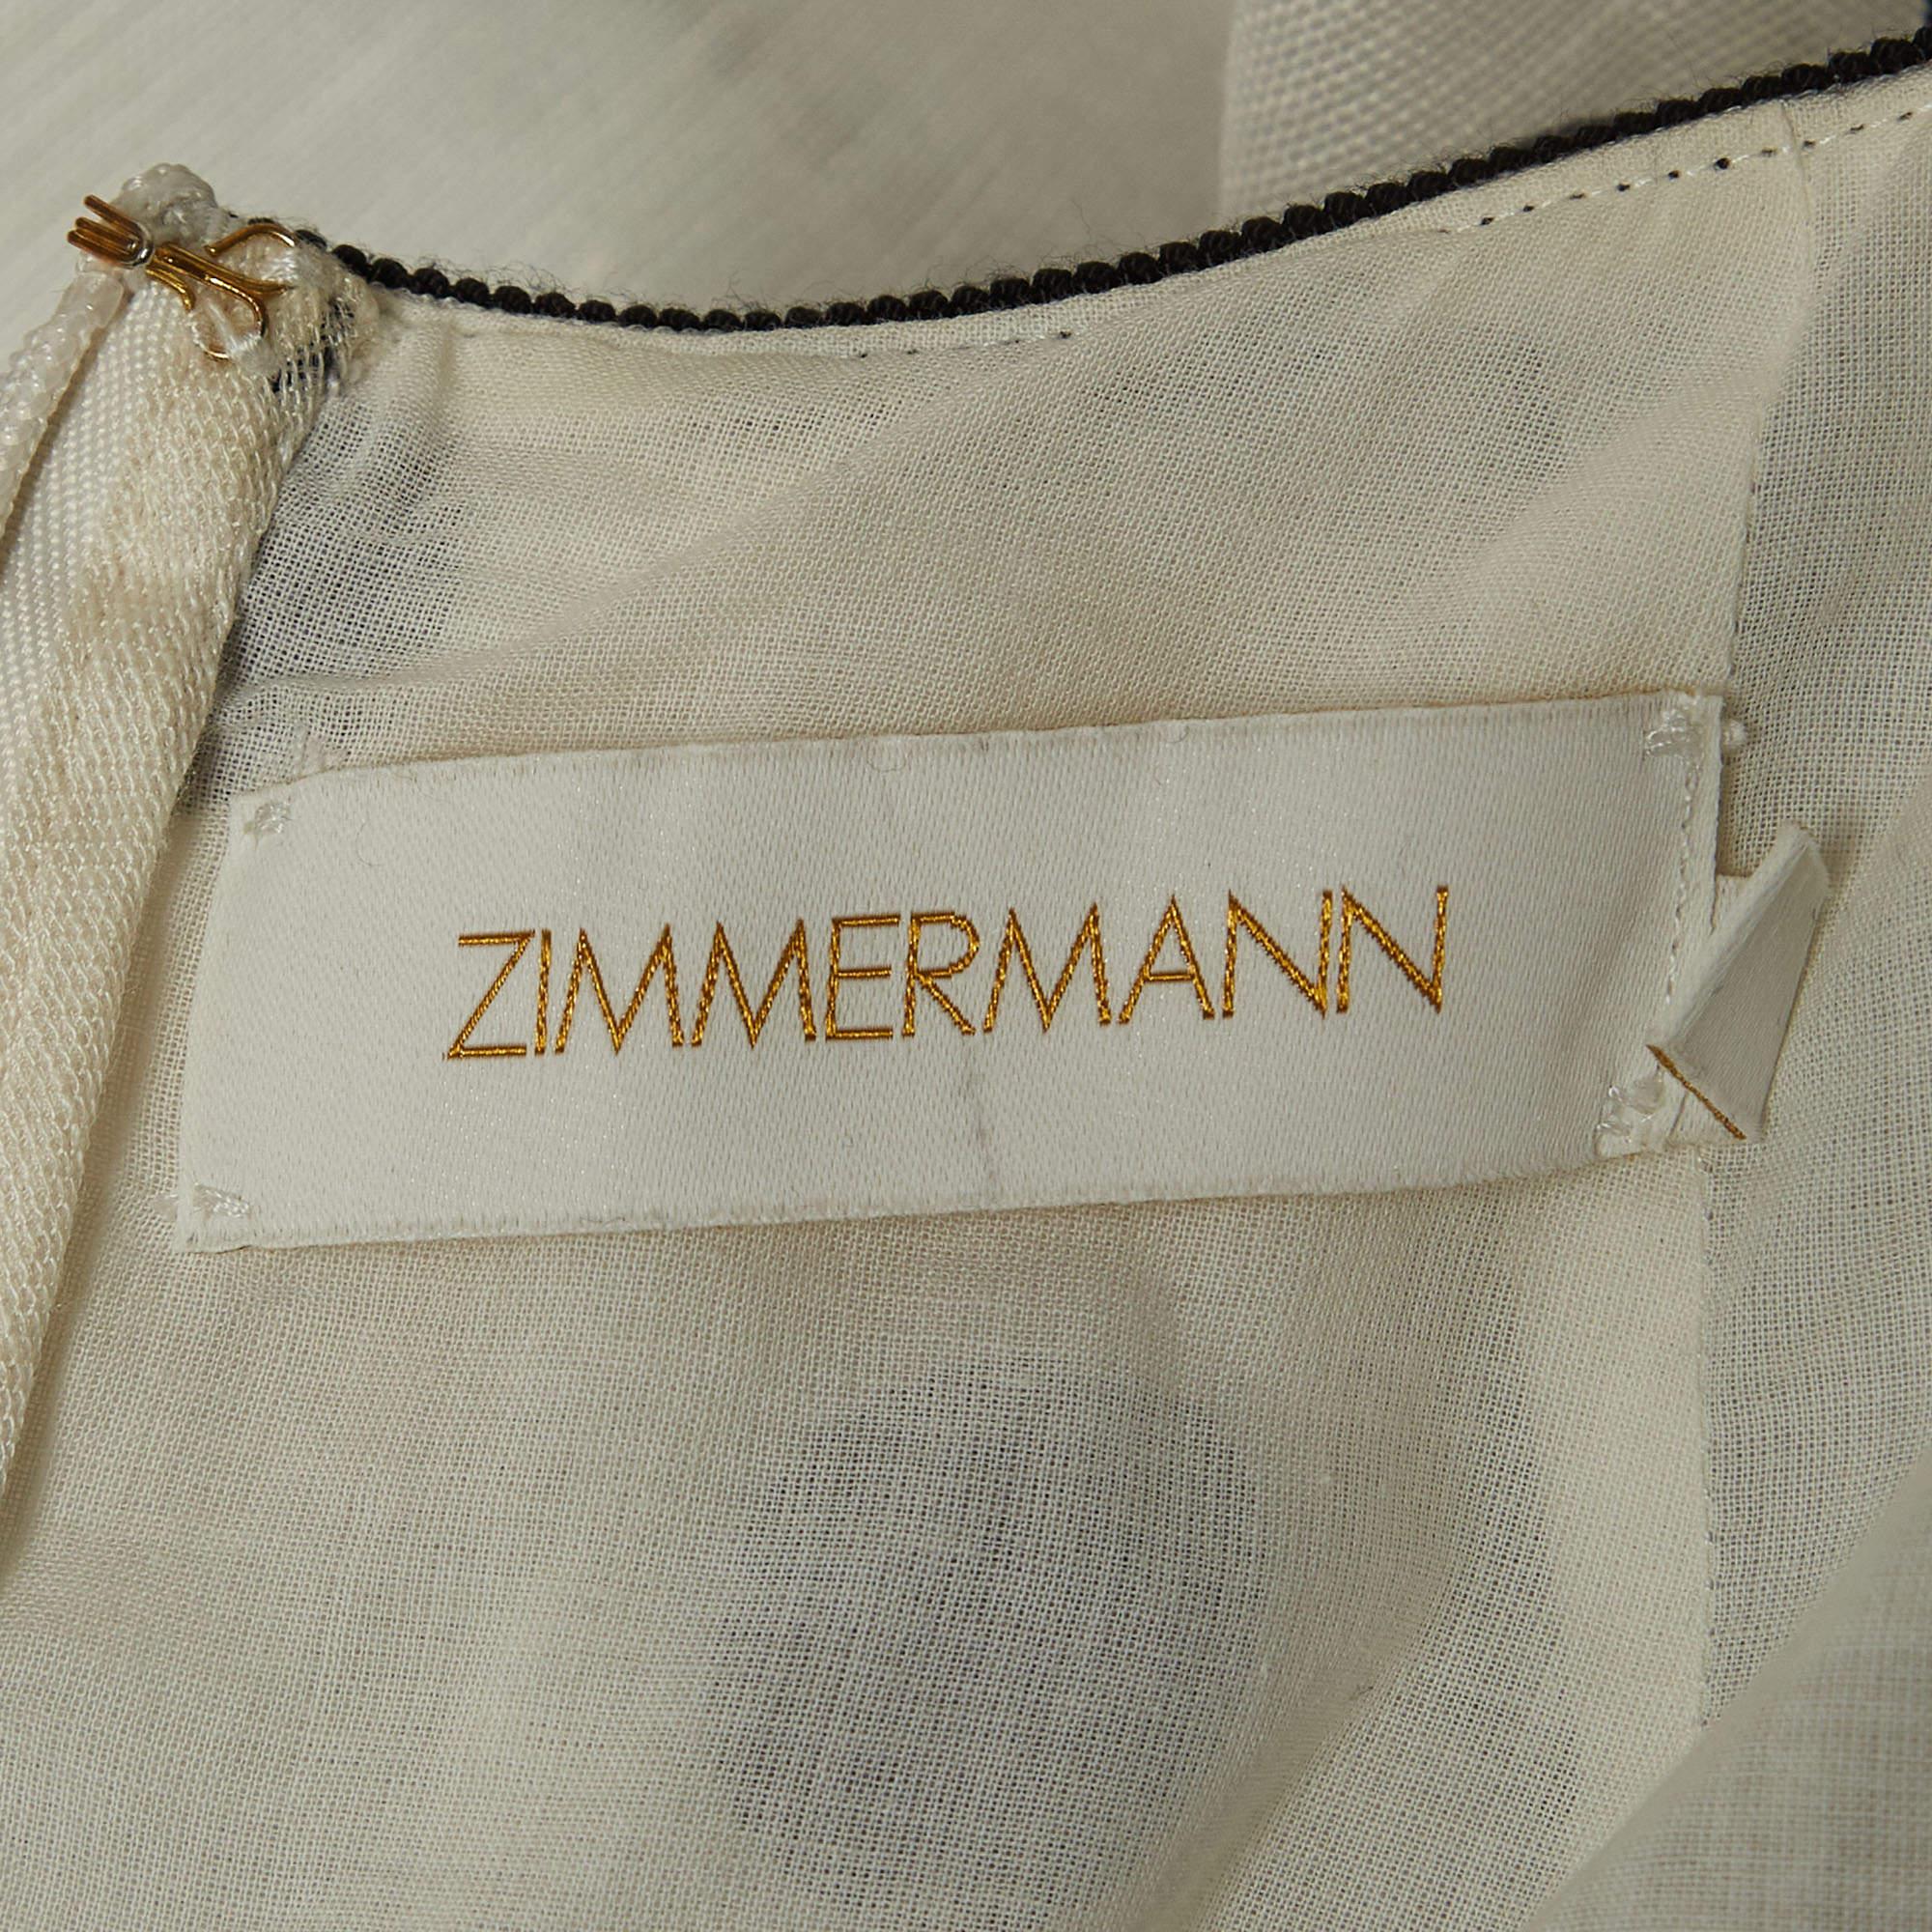 Zimmermann White/Black Polka-Dot Printed Linen Blend Frilled Mini Dress S In Excellent Condition For Sale In Dubai, Al Qouz 2